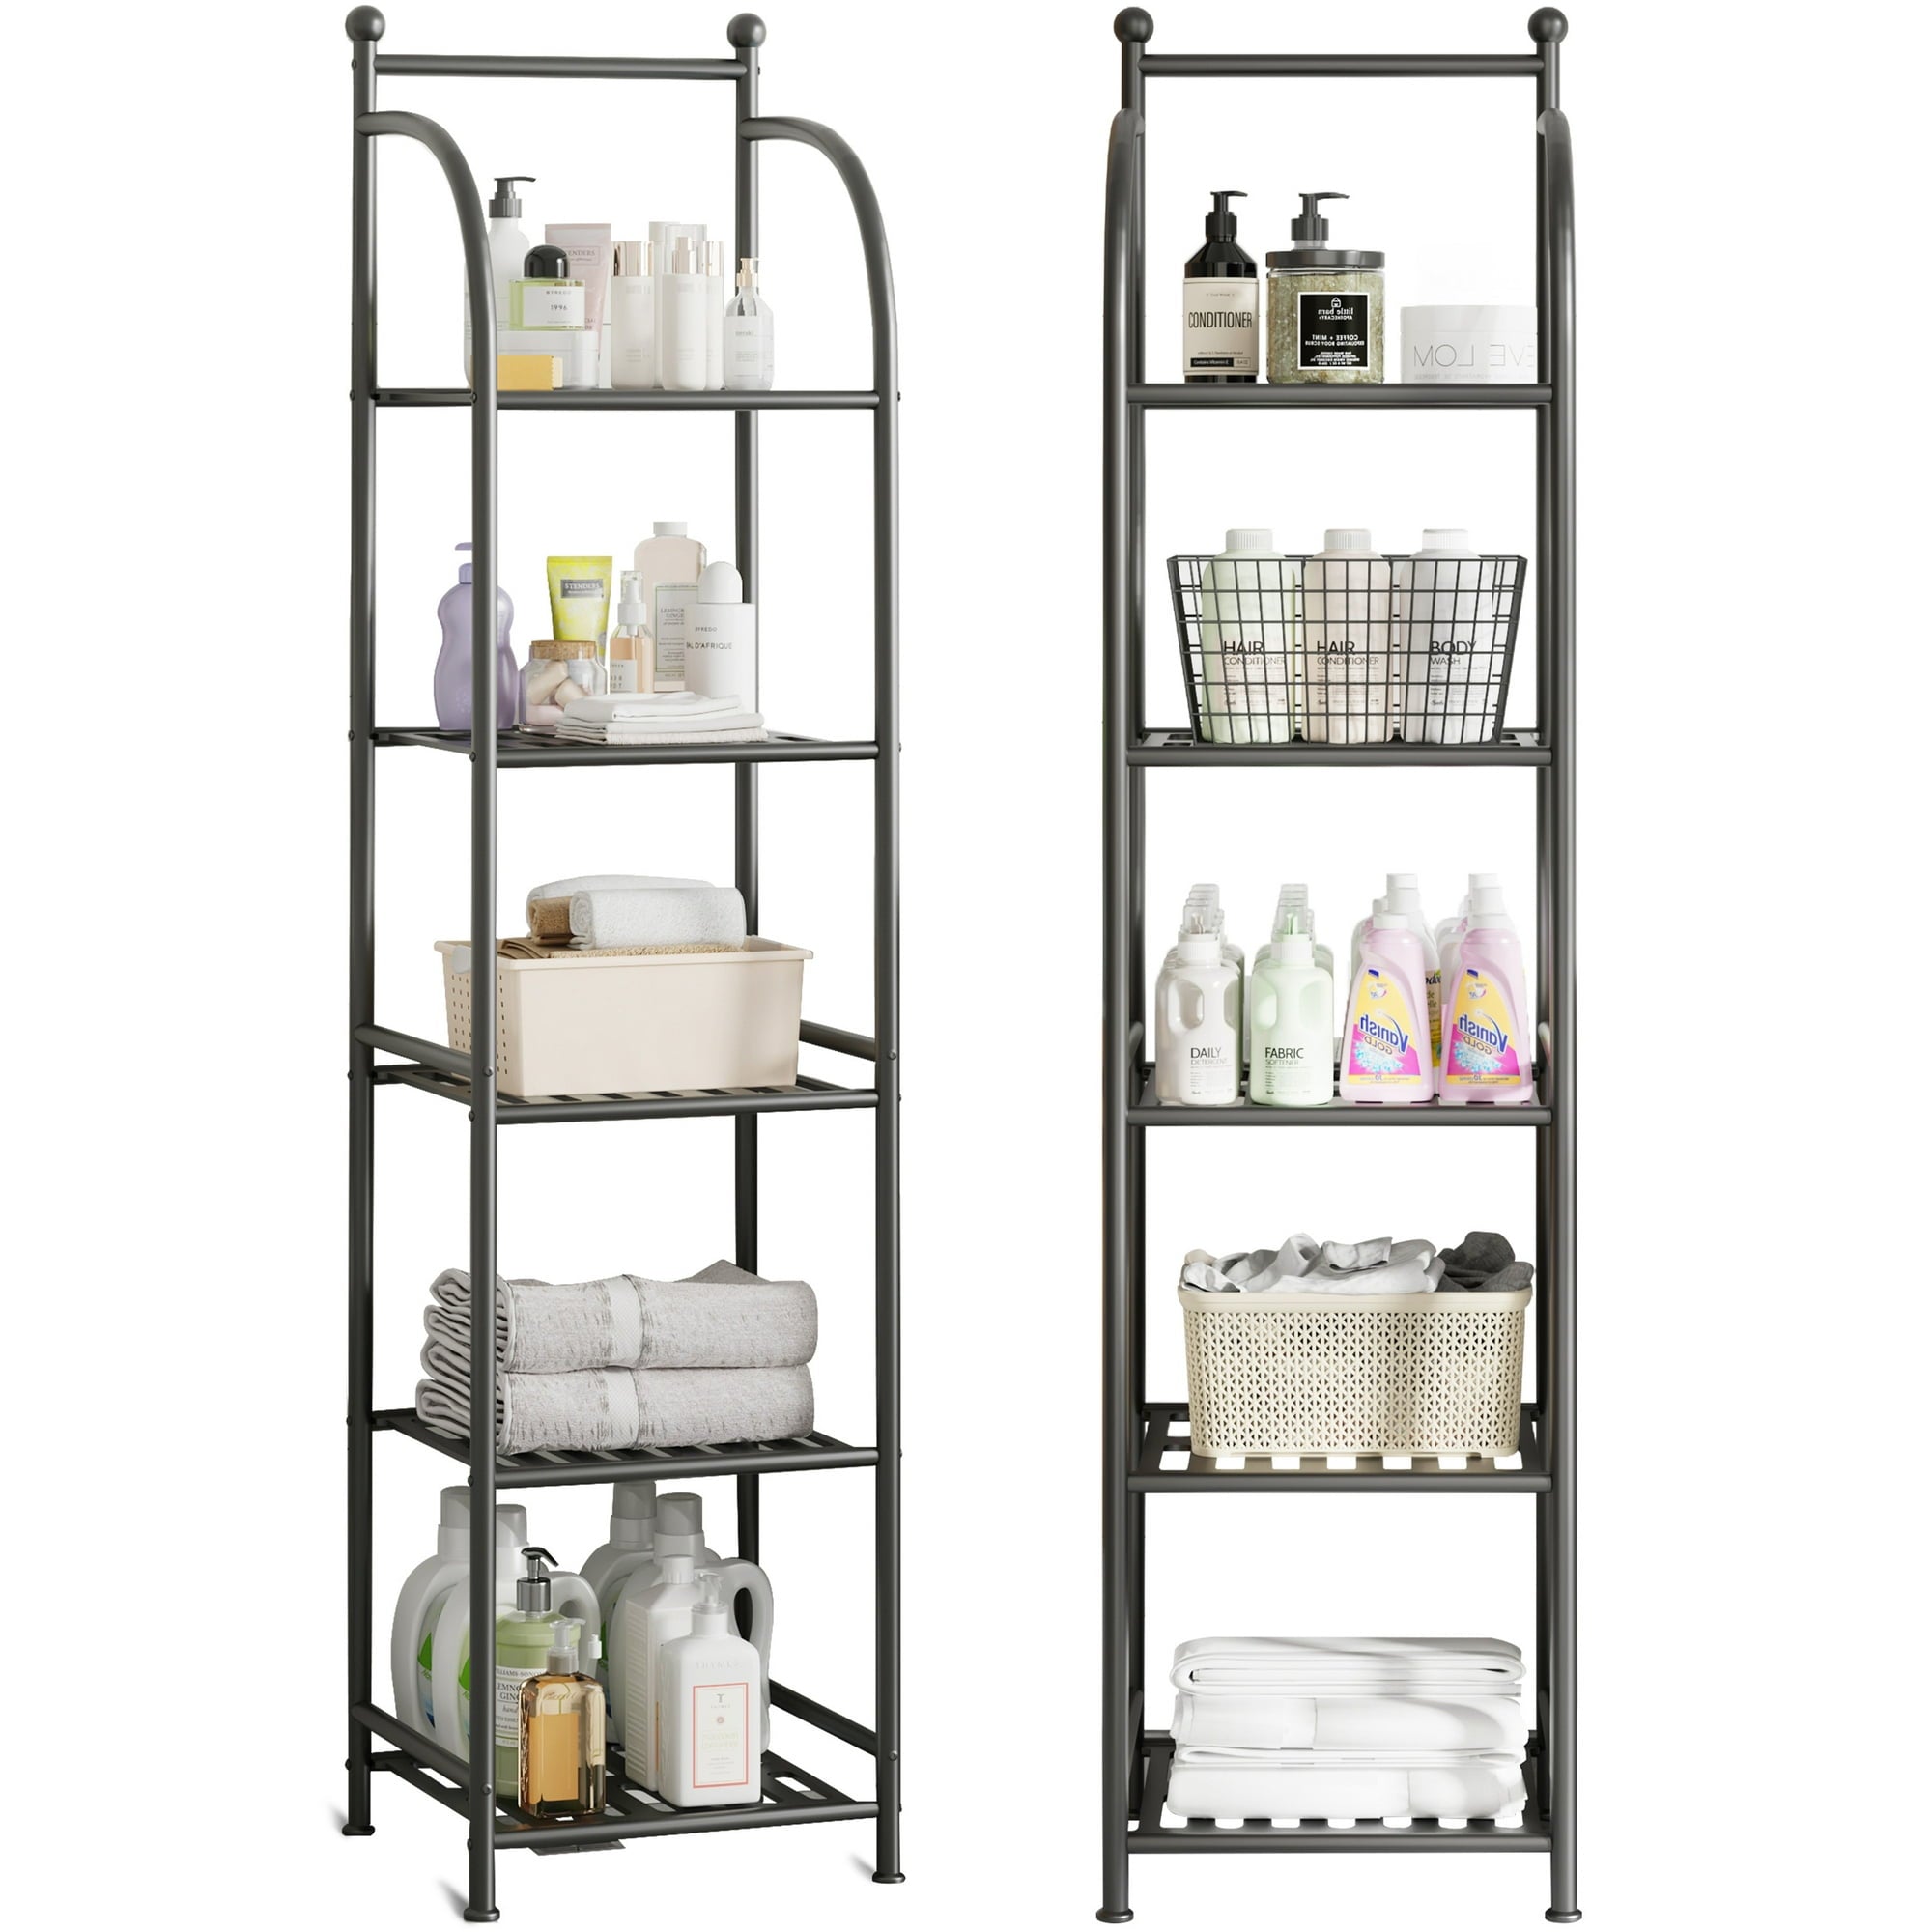 SUGIFT 5 Shelf Bathroom Storage Shelf Unit Shower Shelves for Storage and Towel Display, Black